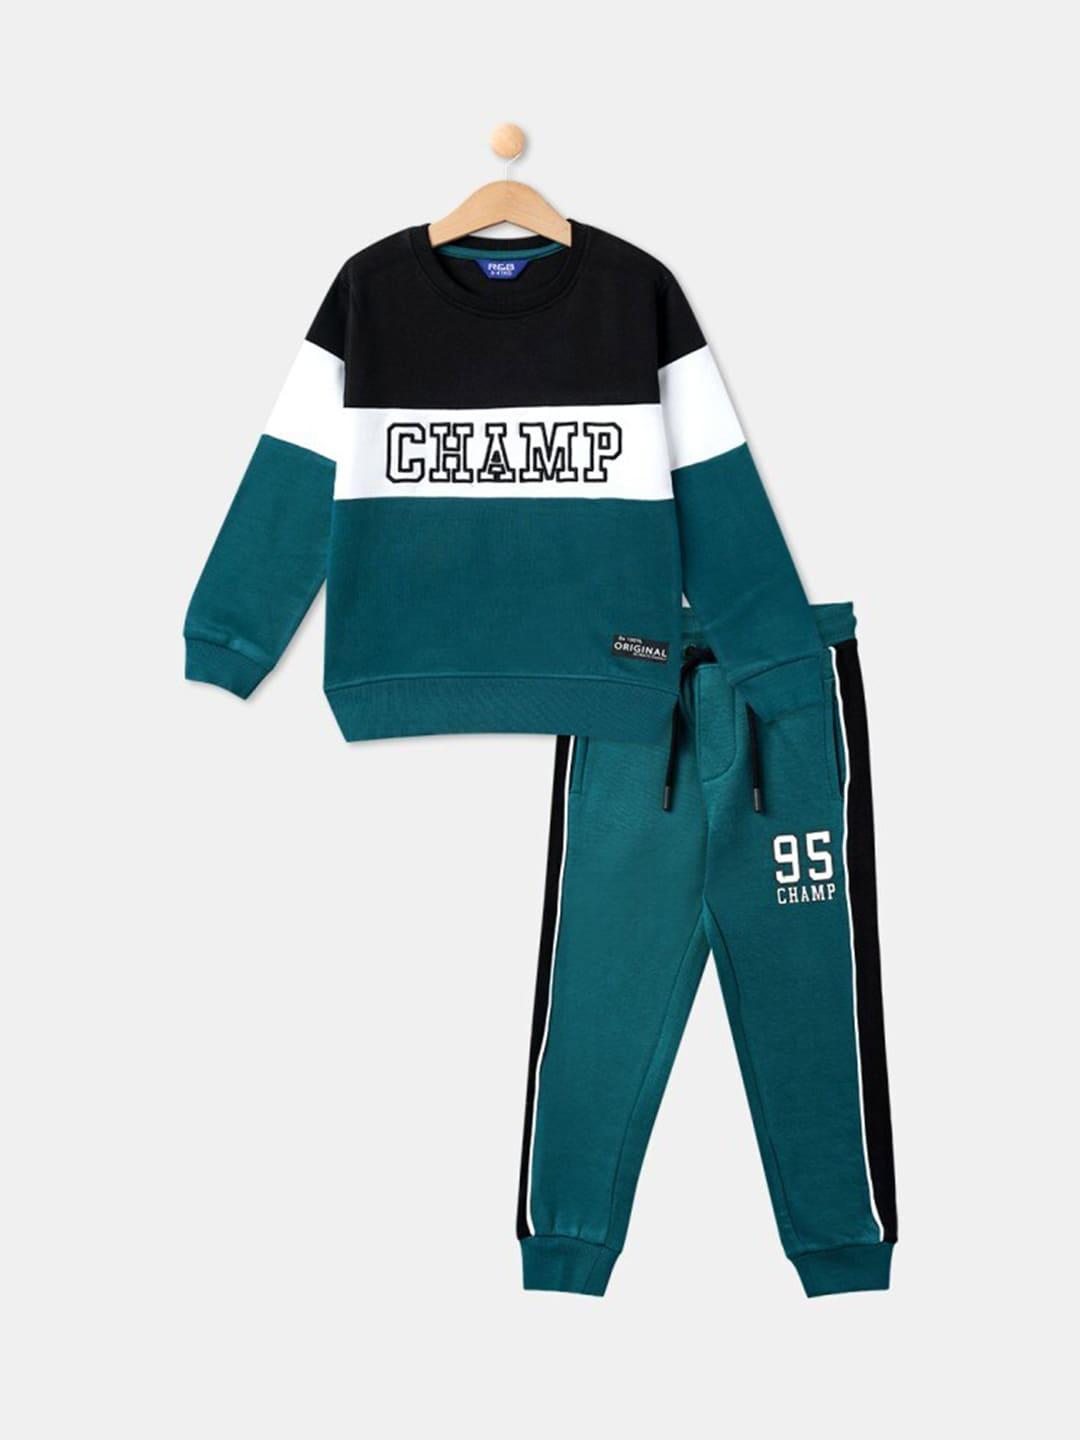 R&B Boys Green & Black Colourblocked T-shirt with Pyjamas